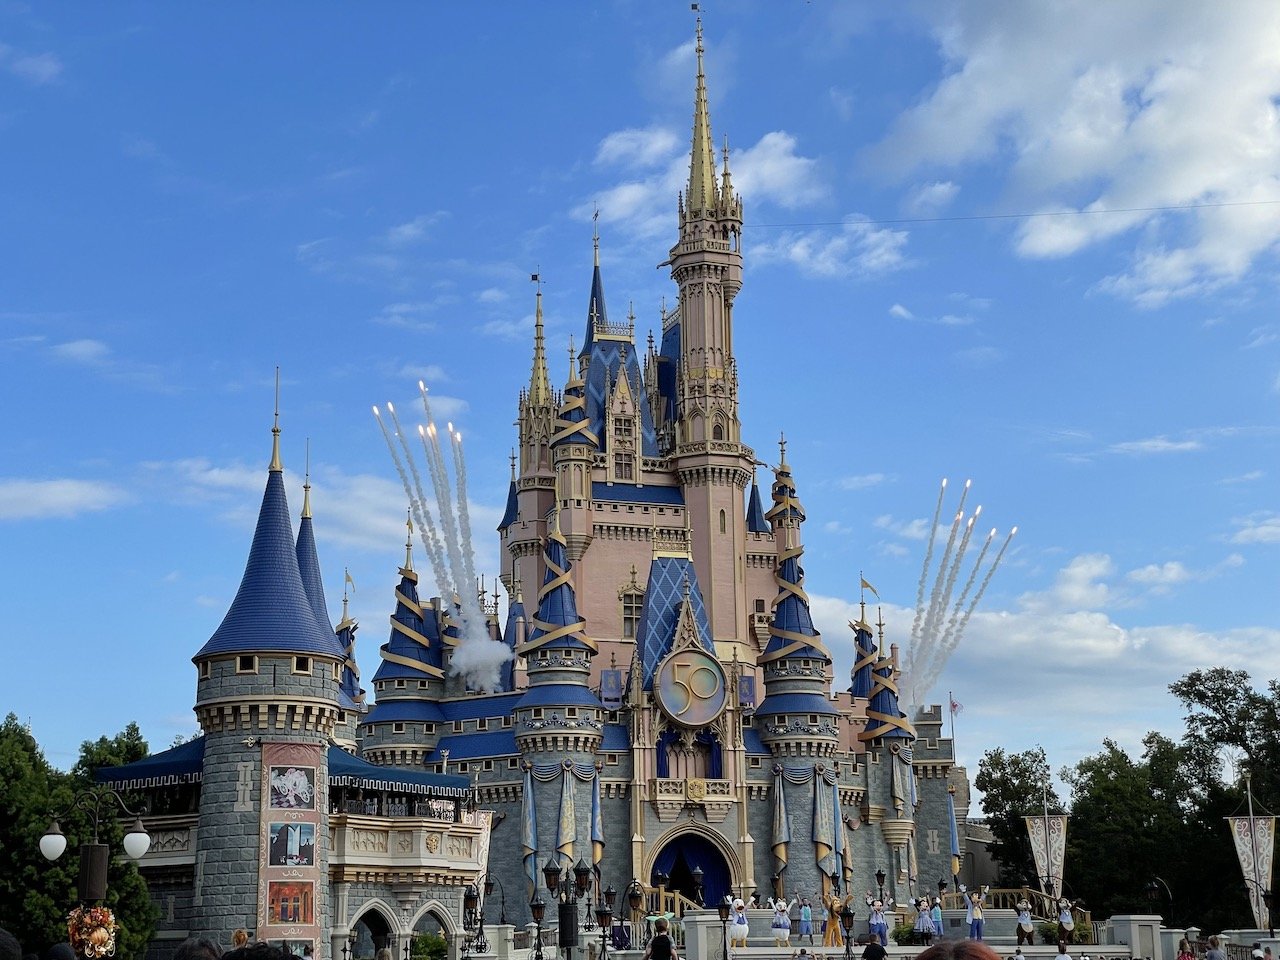 The Disney Castle